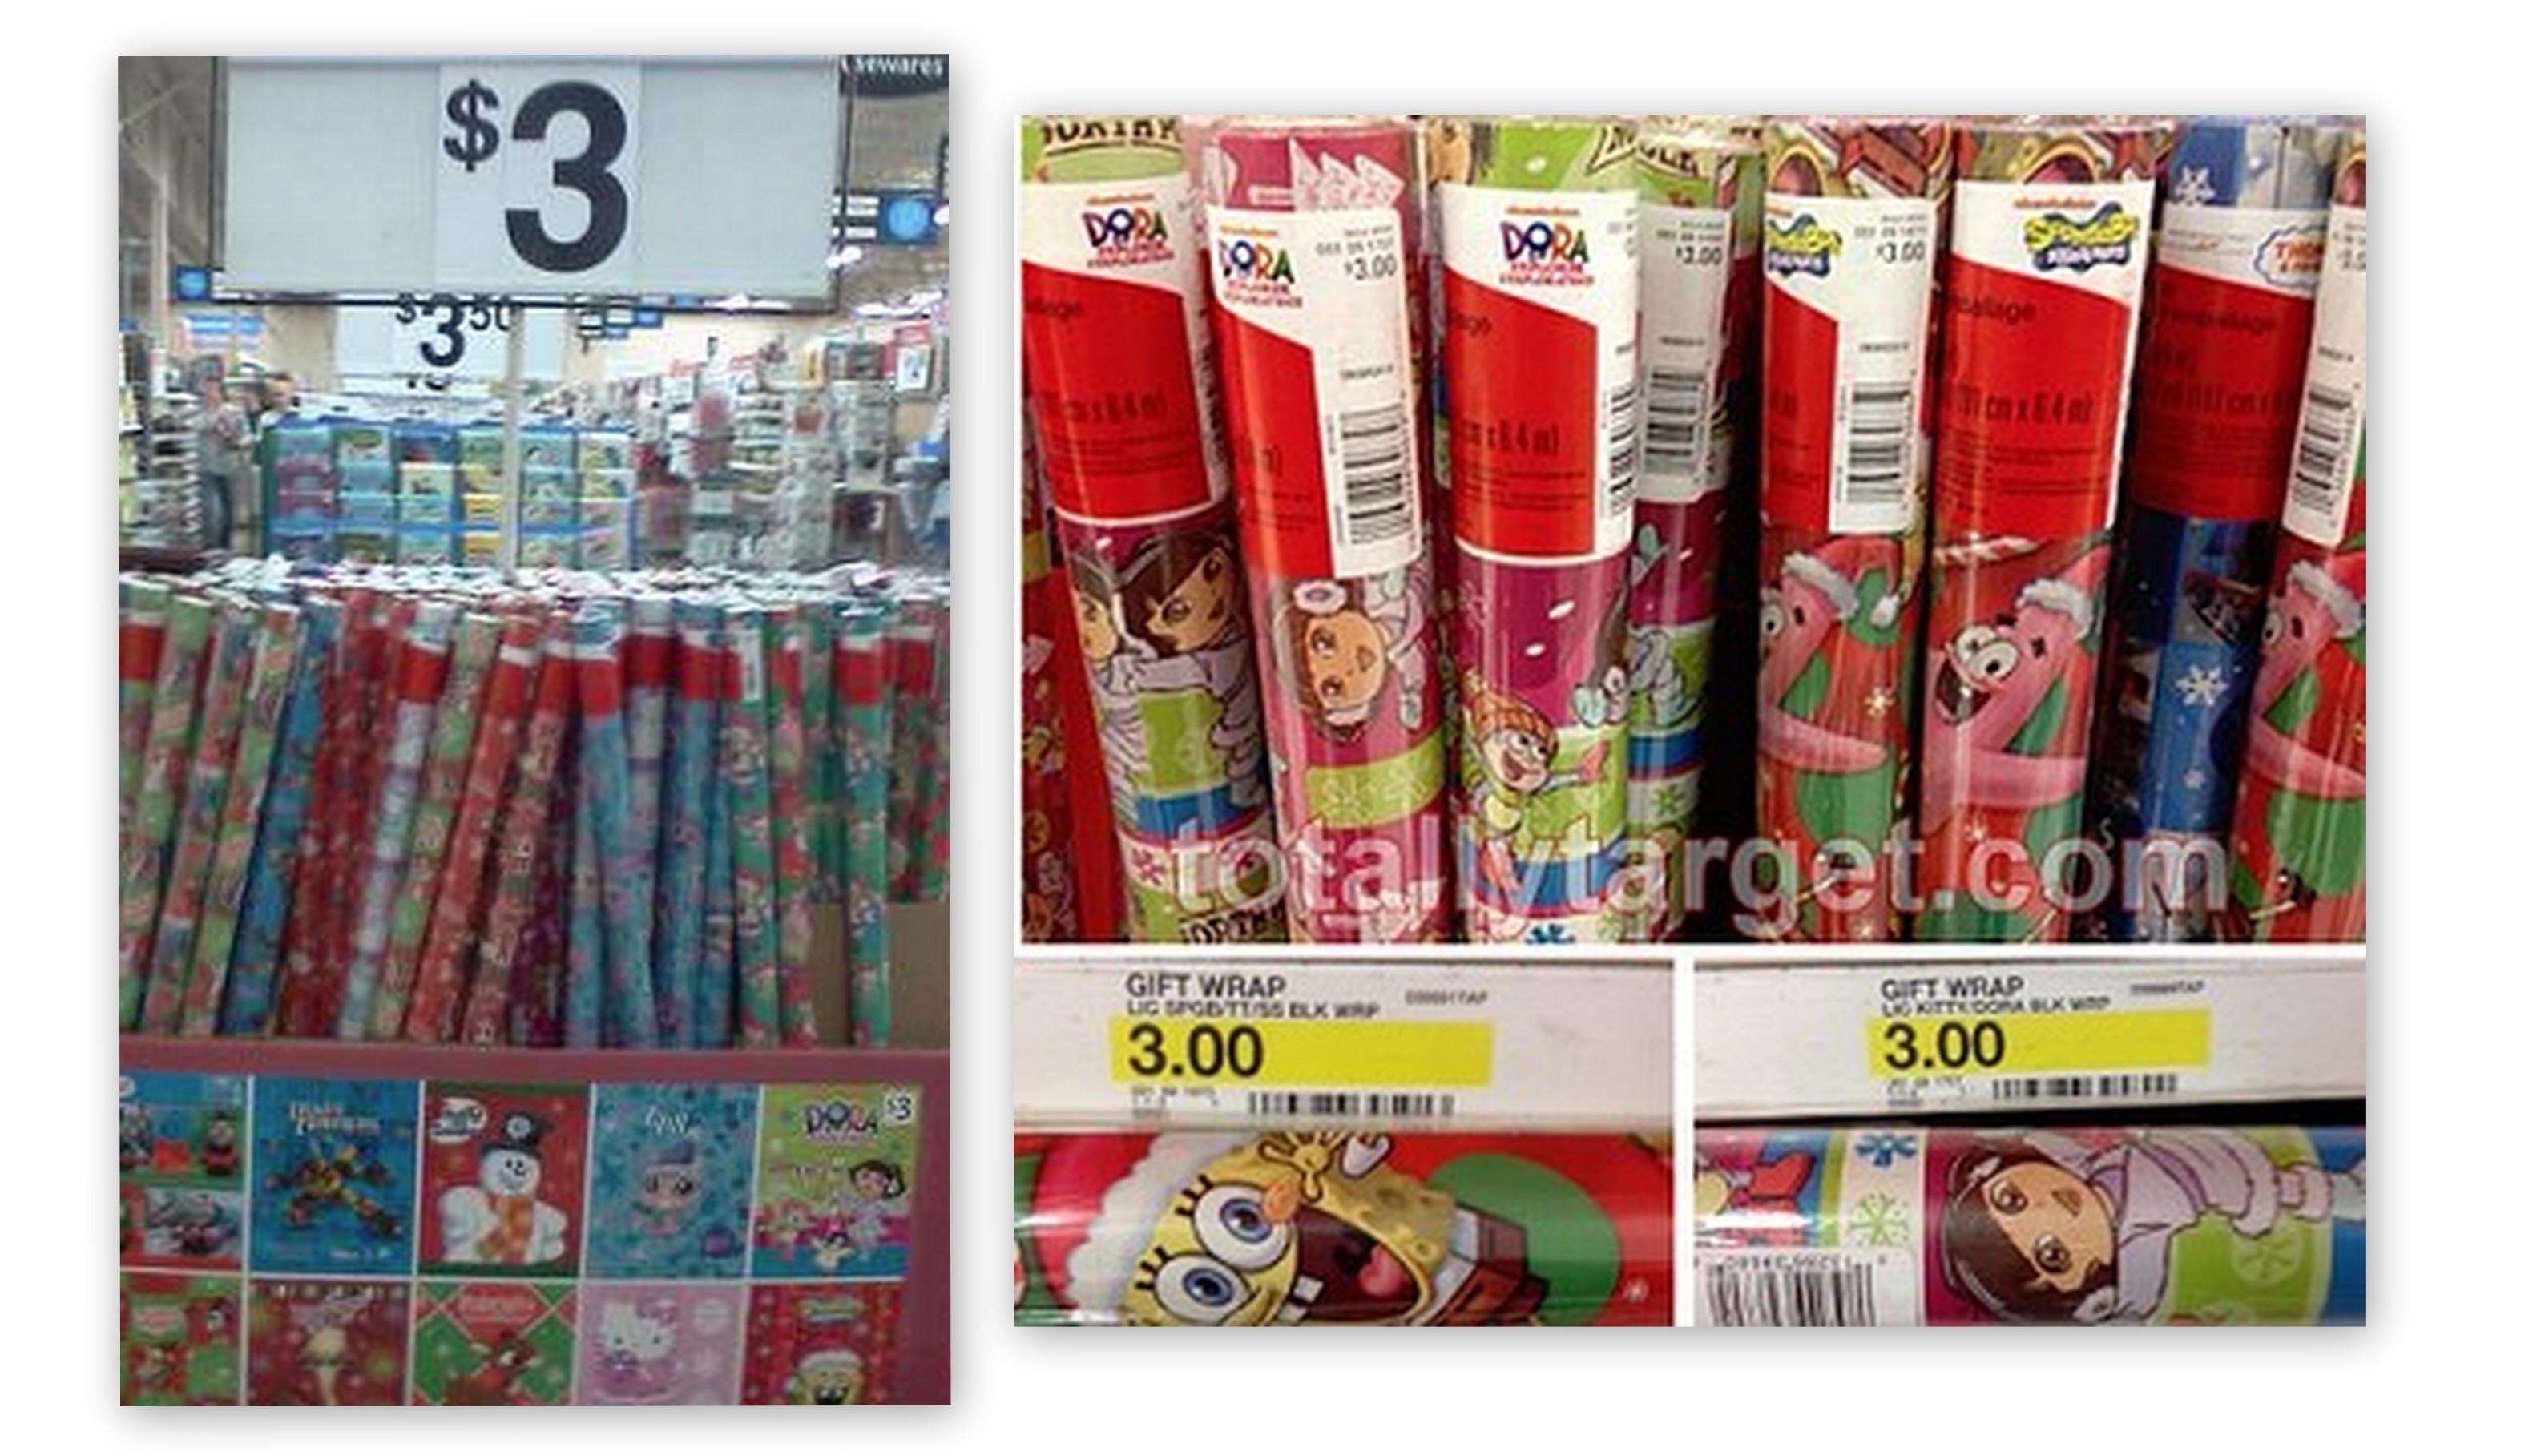 Spongebob or Dora Gift Wrap = $2 at Target and Walmart